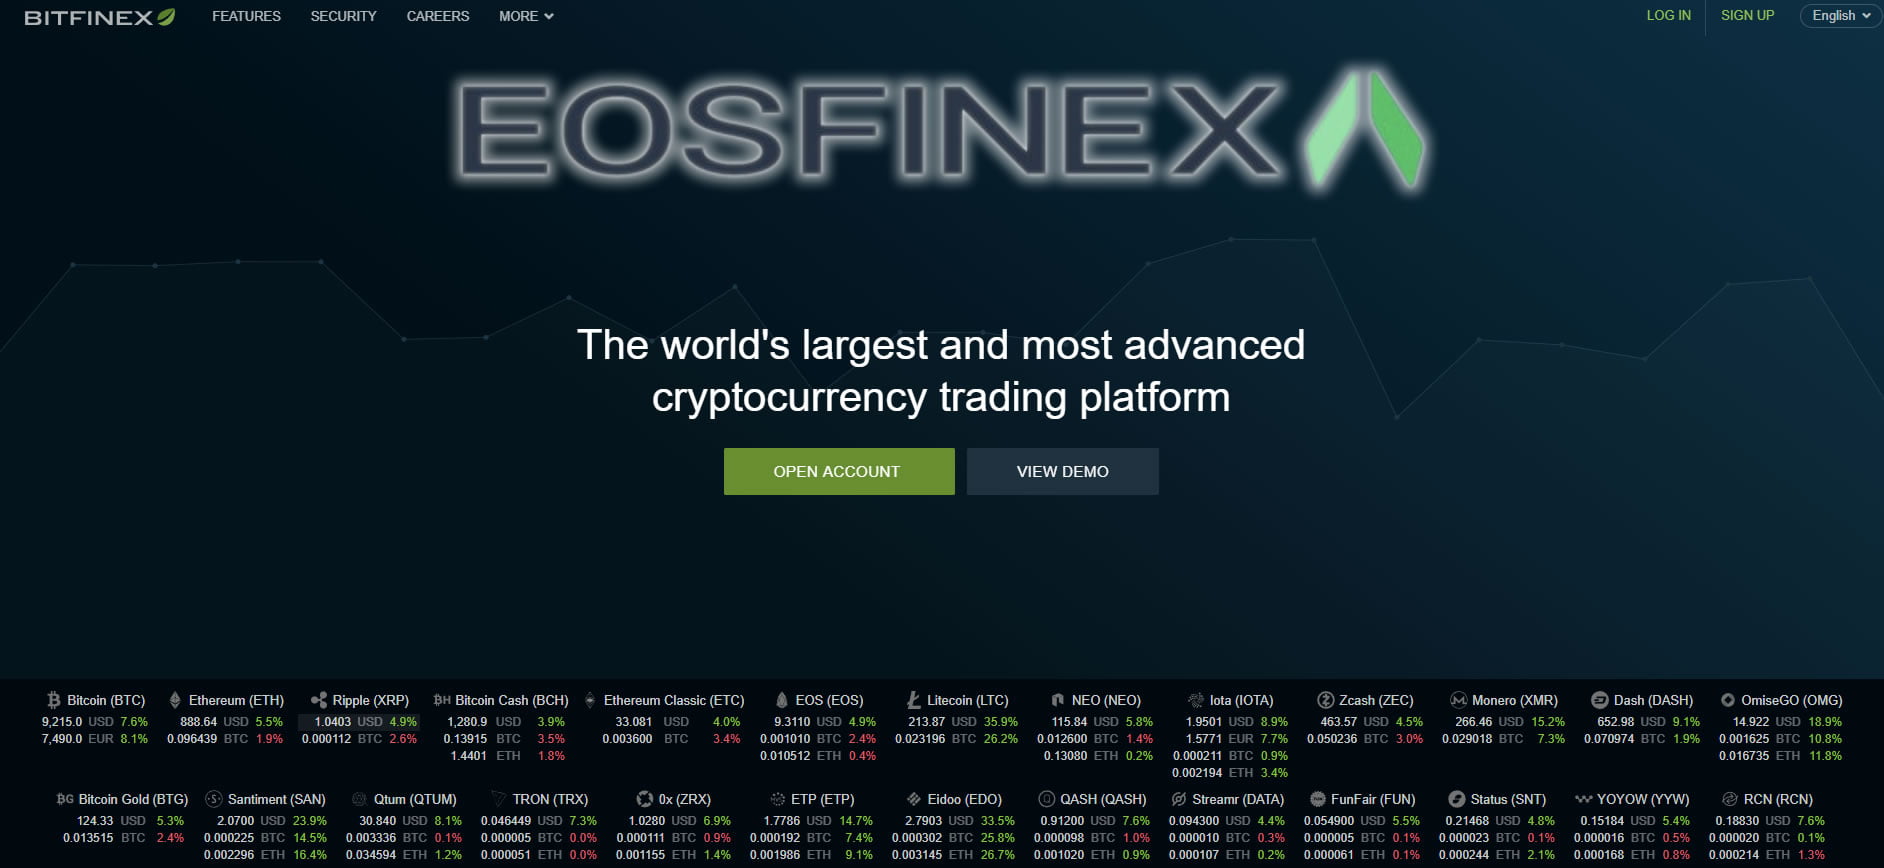 Bitfinex Announce Launch of EOSfinex Decentralized Trading Platform